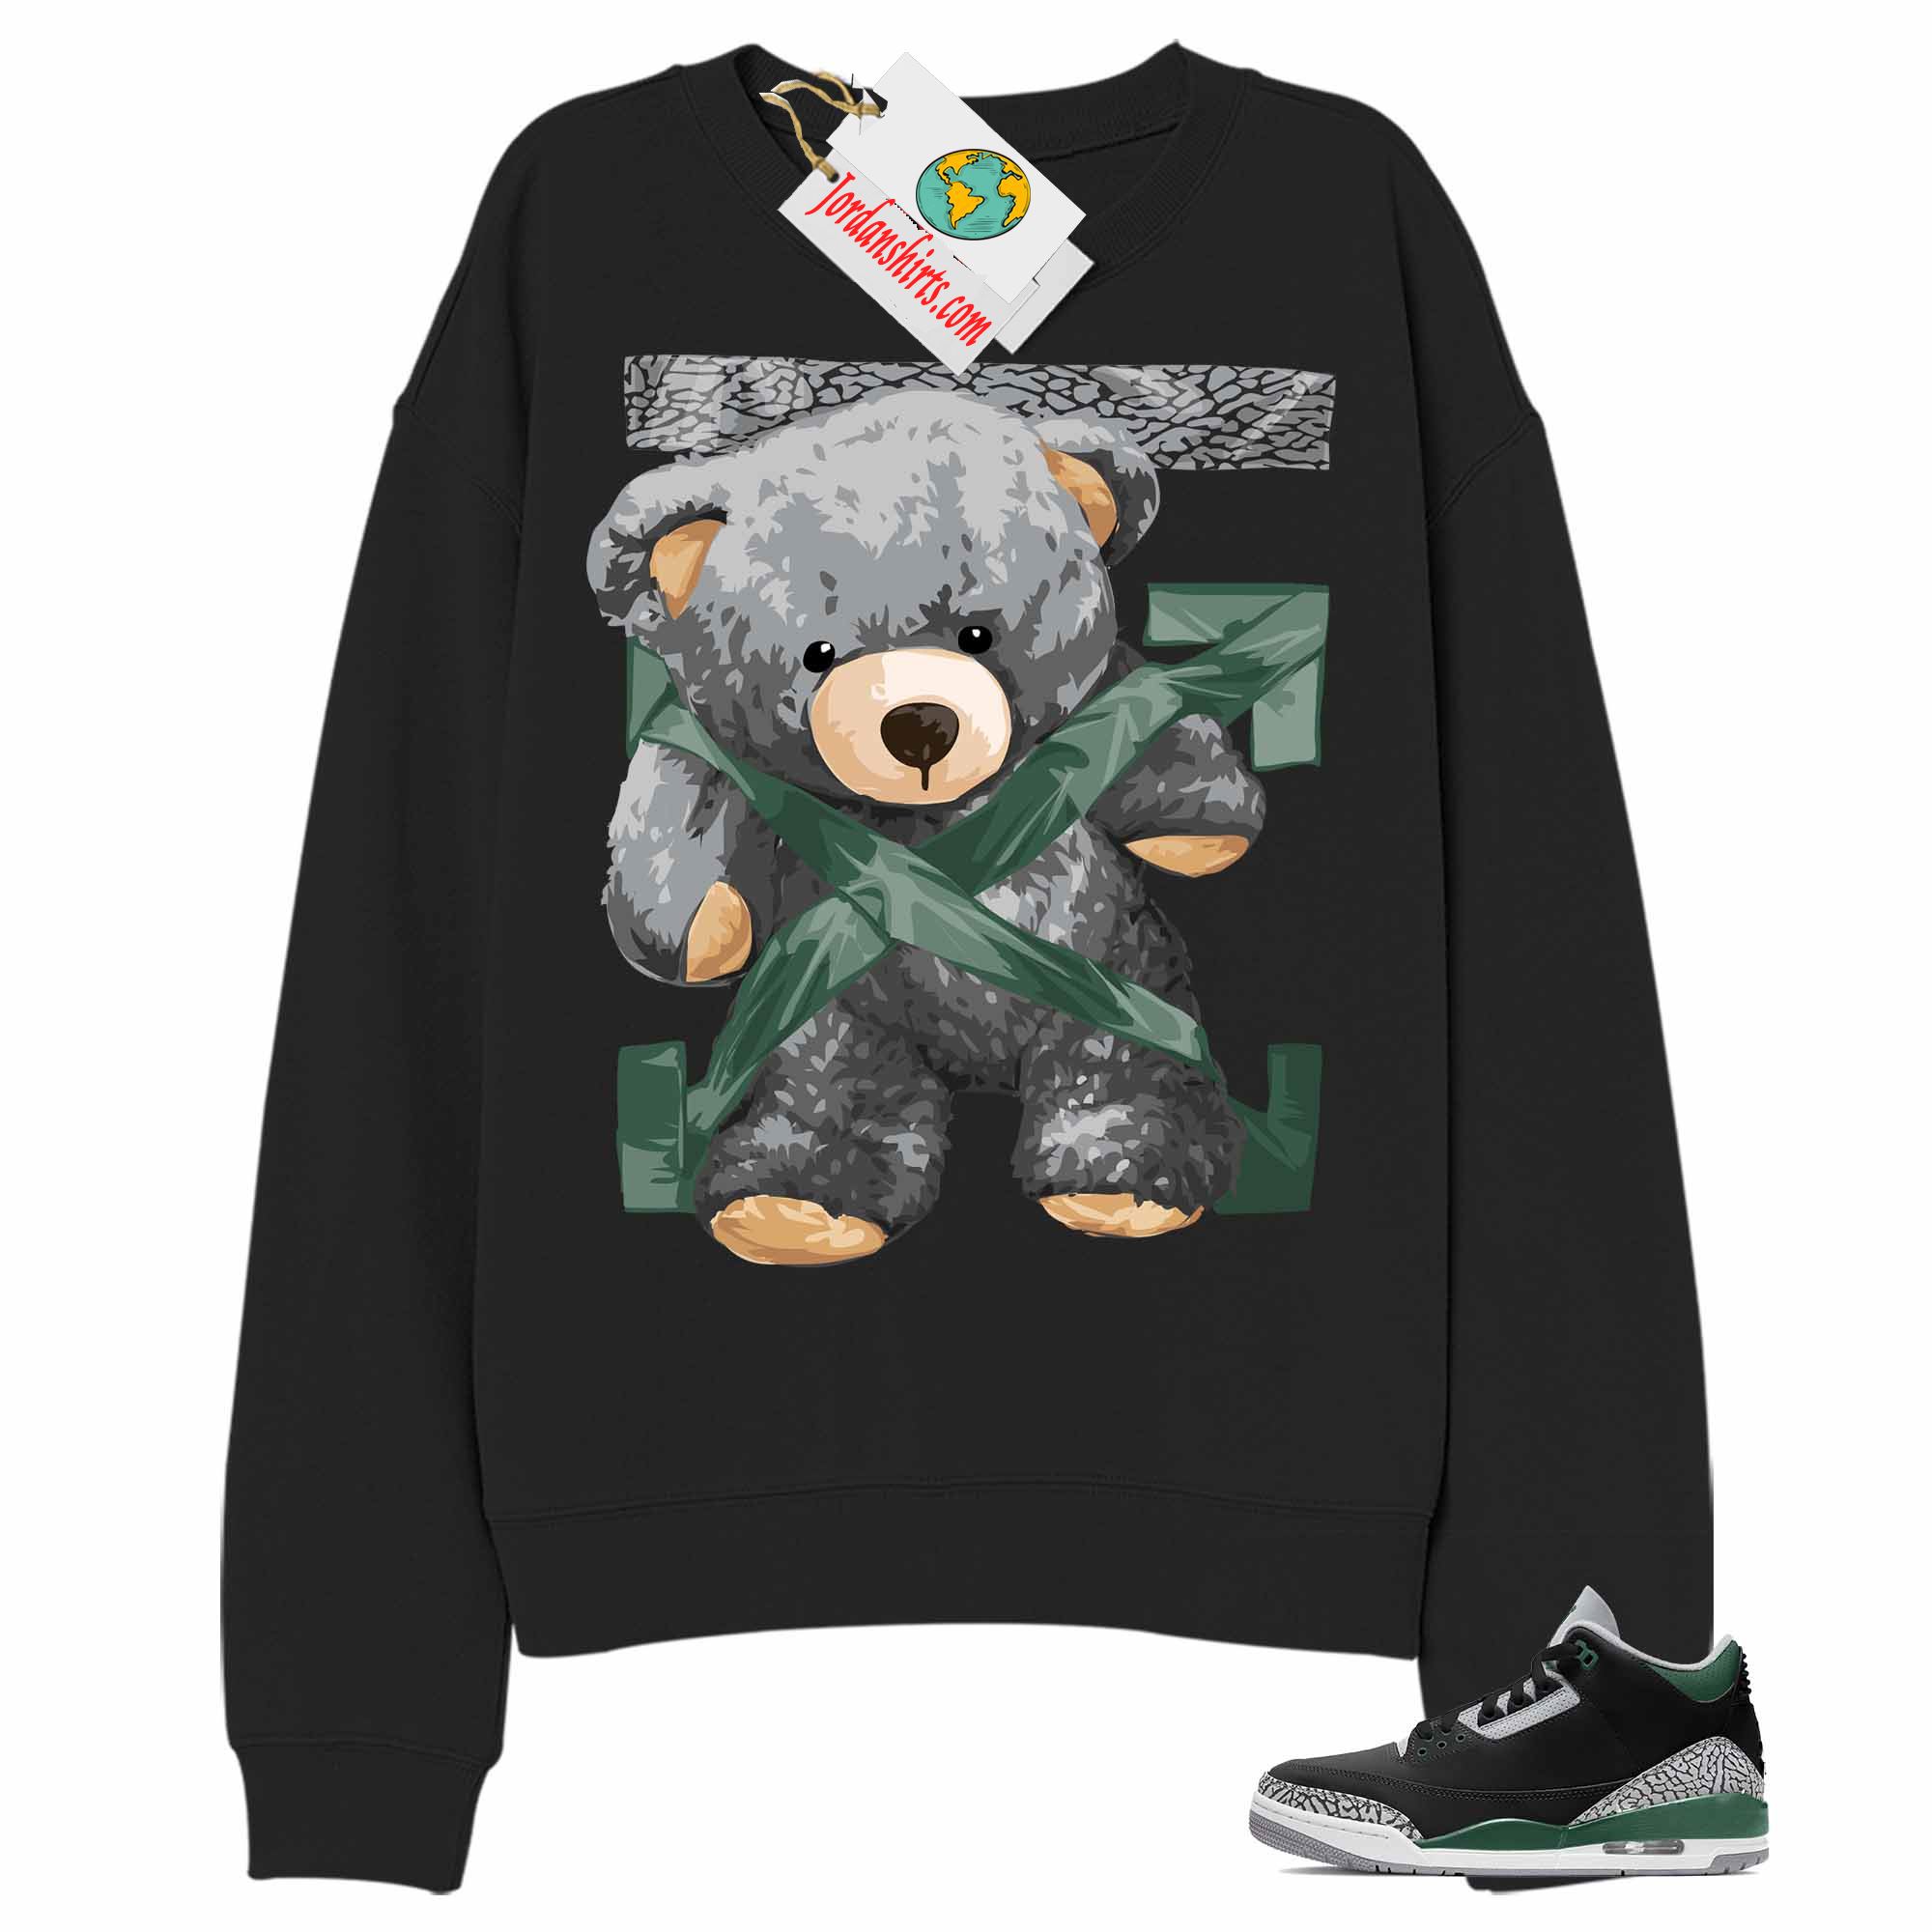 Jordan 3 Sweatshirt, Teddy Bear Duck Tape Black Sweatshirt Air Jordan 3 Pine Green 3s Plus Size Up To 5xl